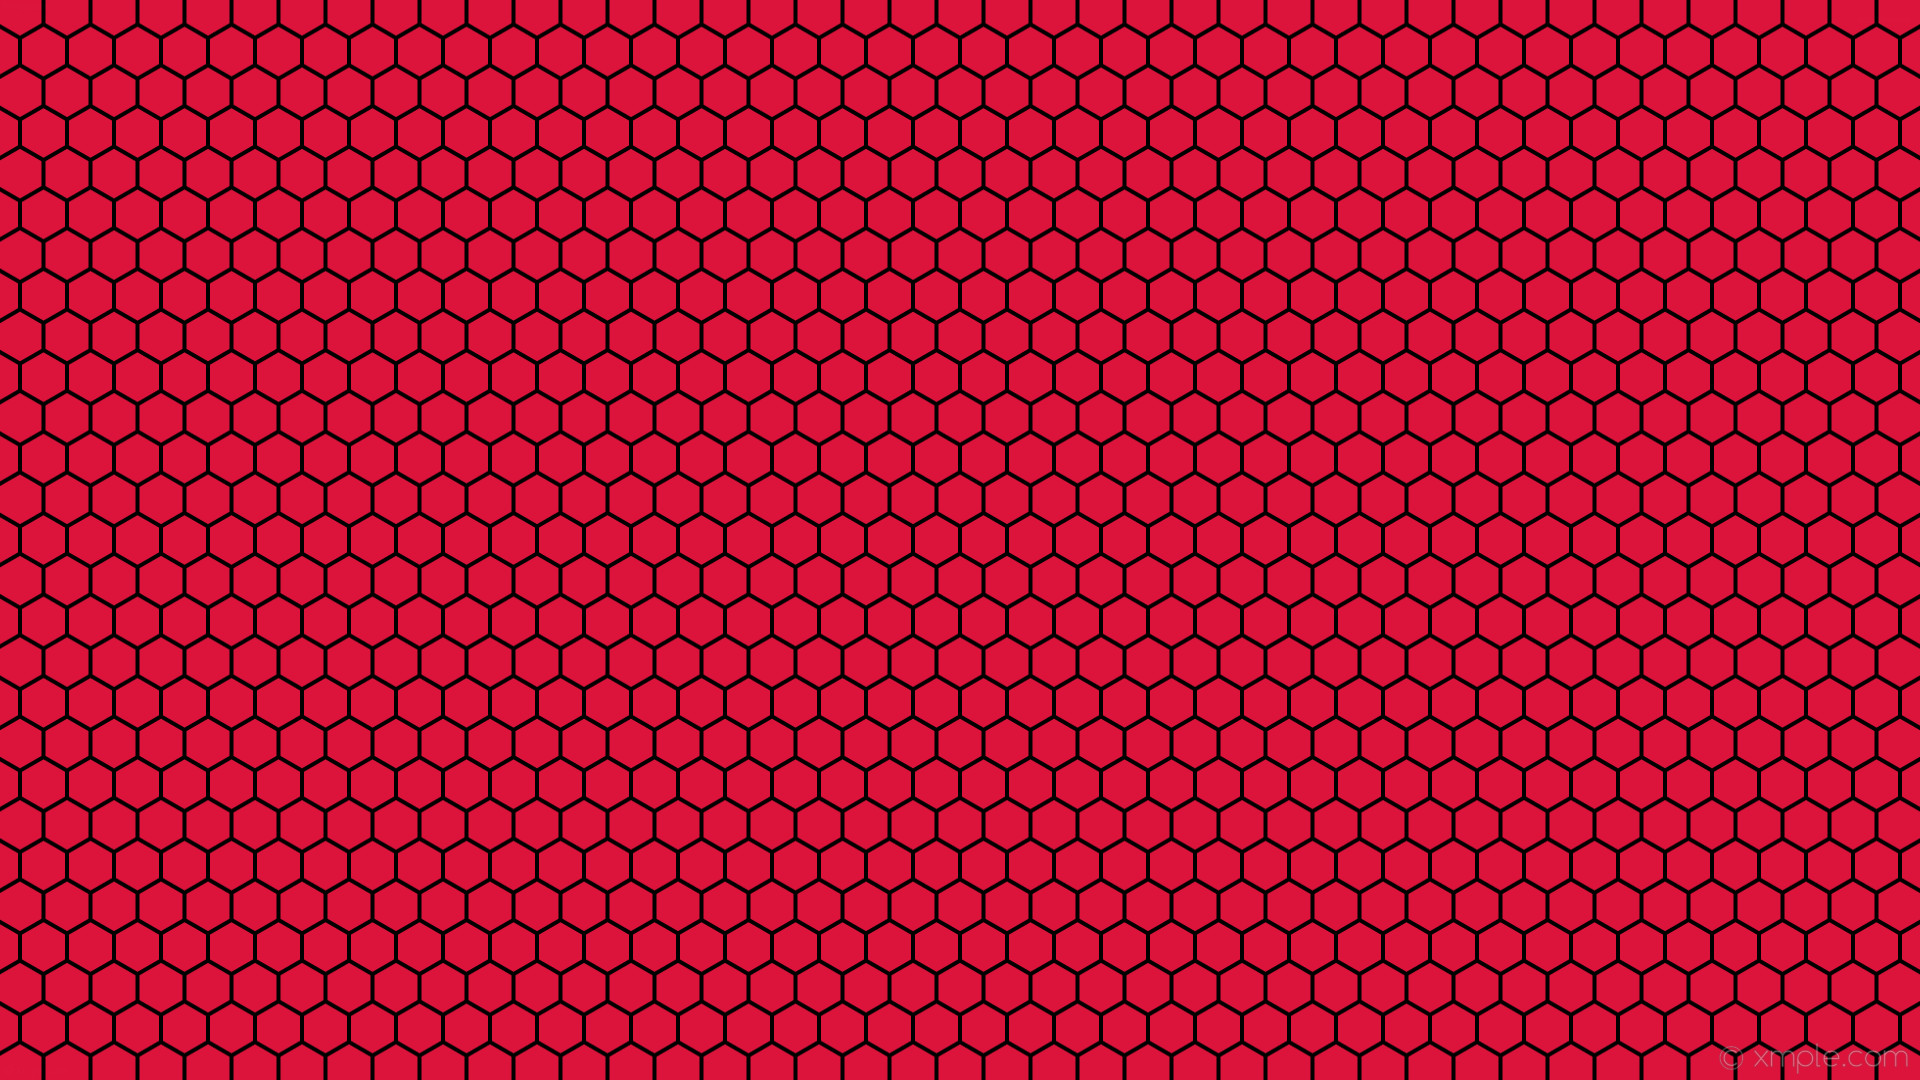 1920x1080 wallpaper black red hexagon honeycomb beehive crimson #dc143c #000000 0Â°  4px 47px